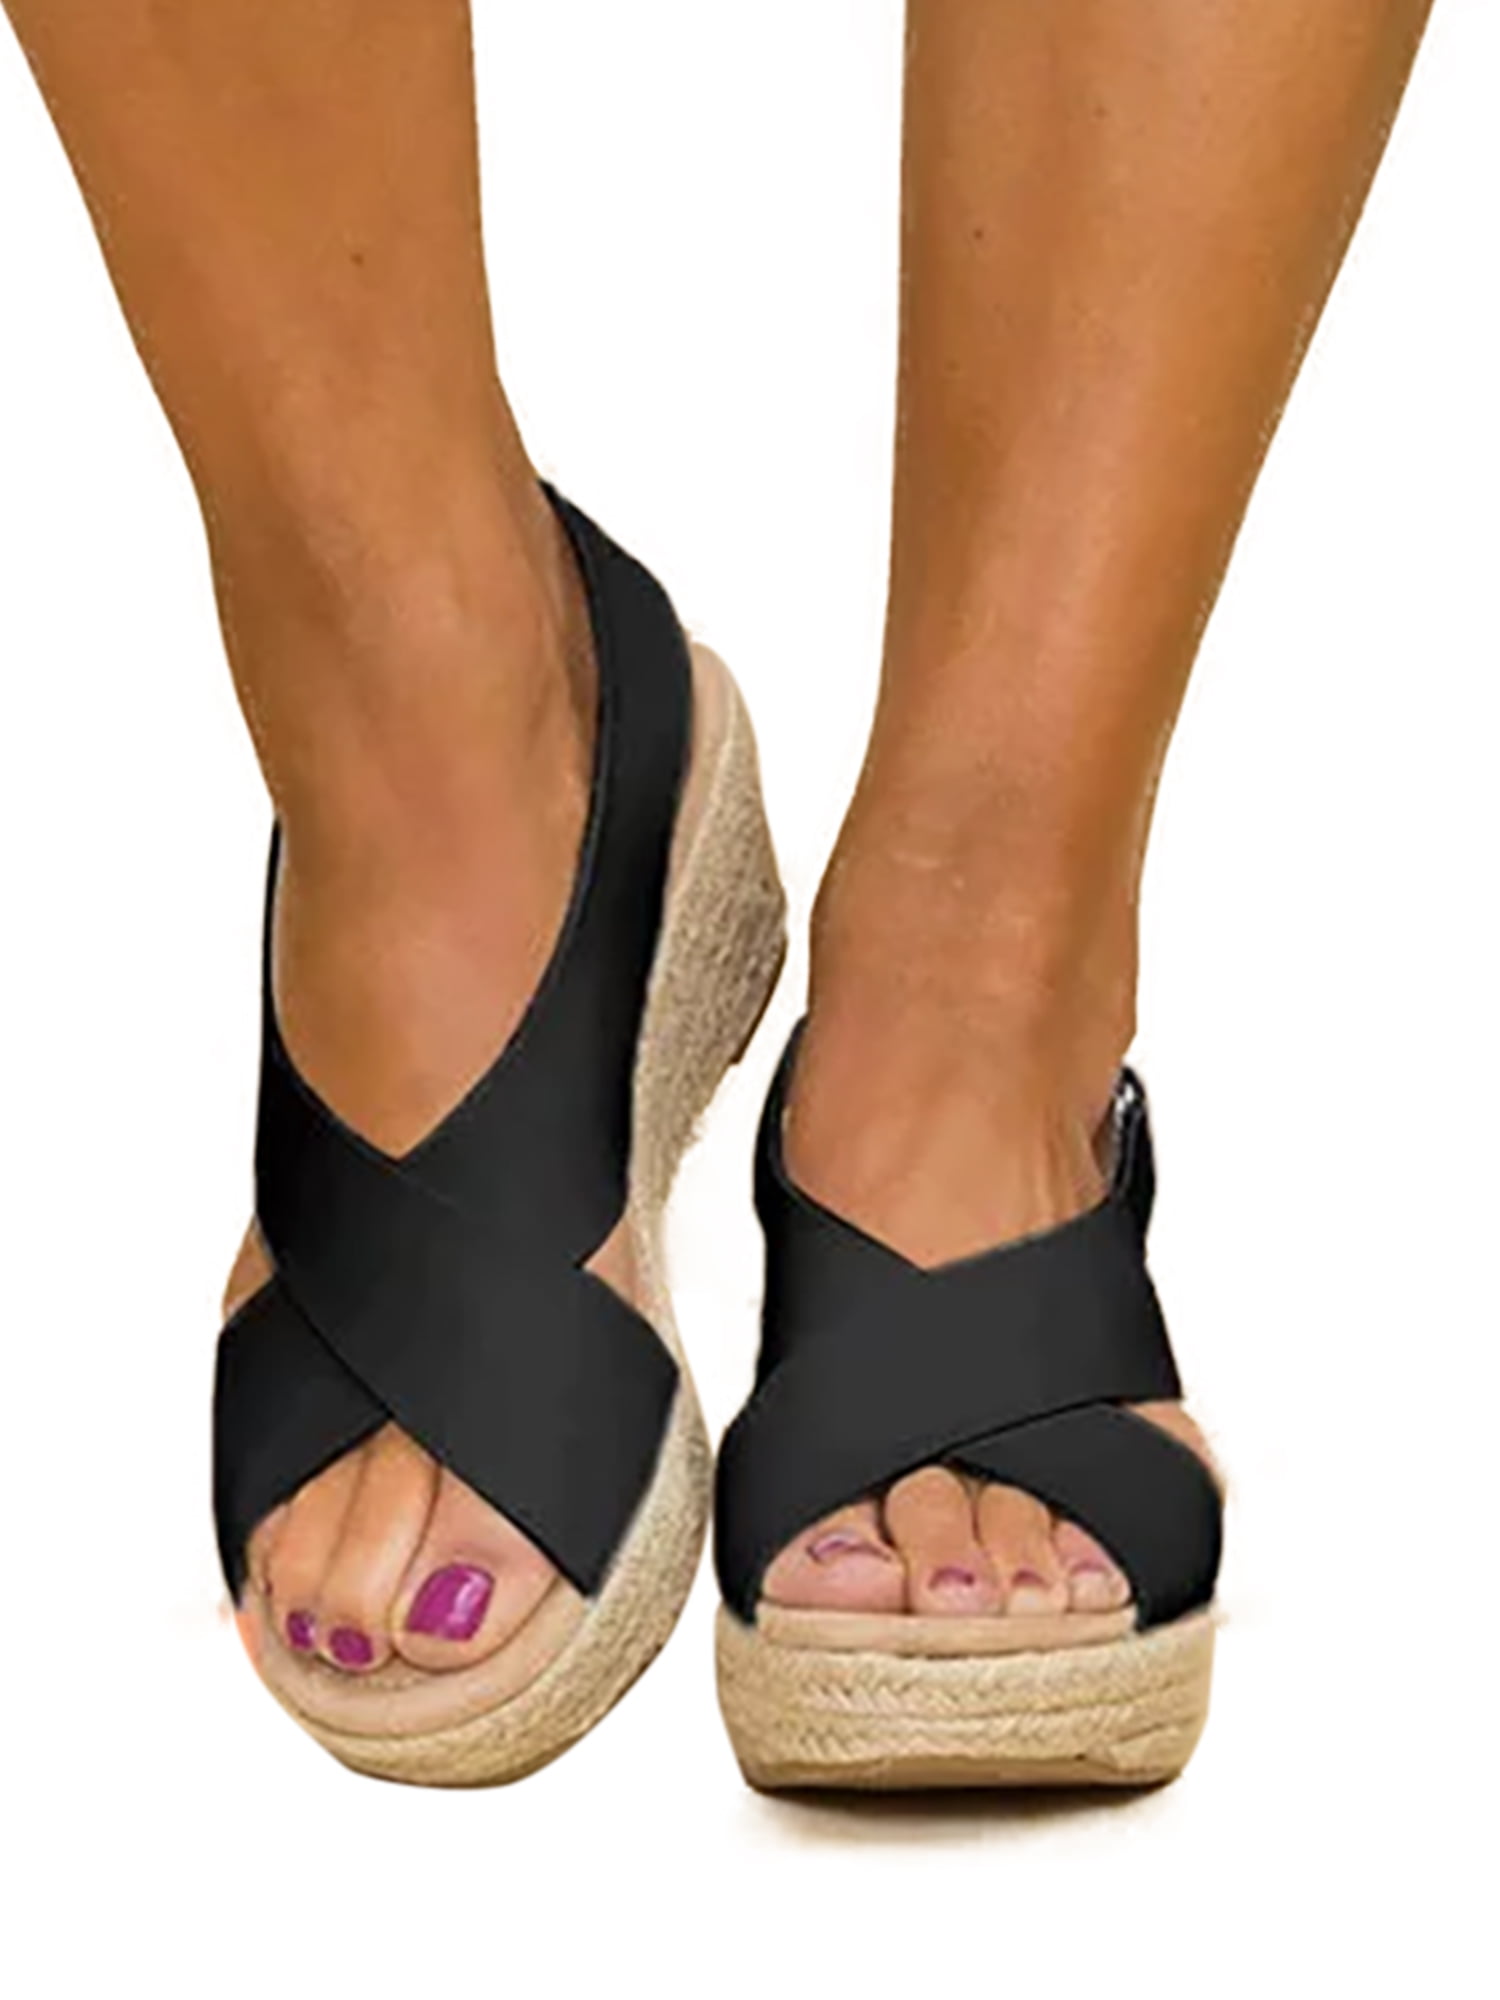 Womens Summer Espadrilles Wedge Platform Sandals Casual Beach Ankle Strap Shoes